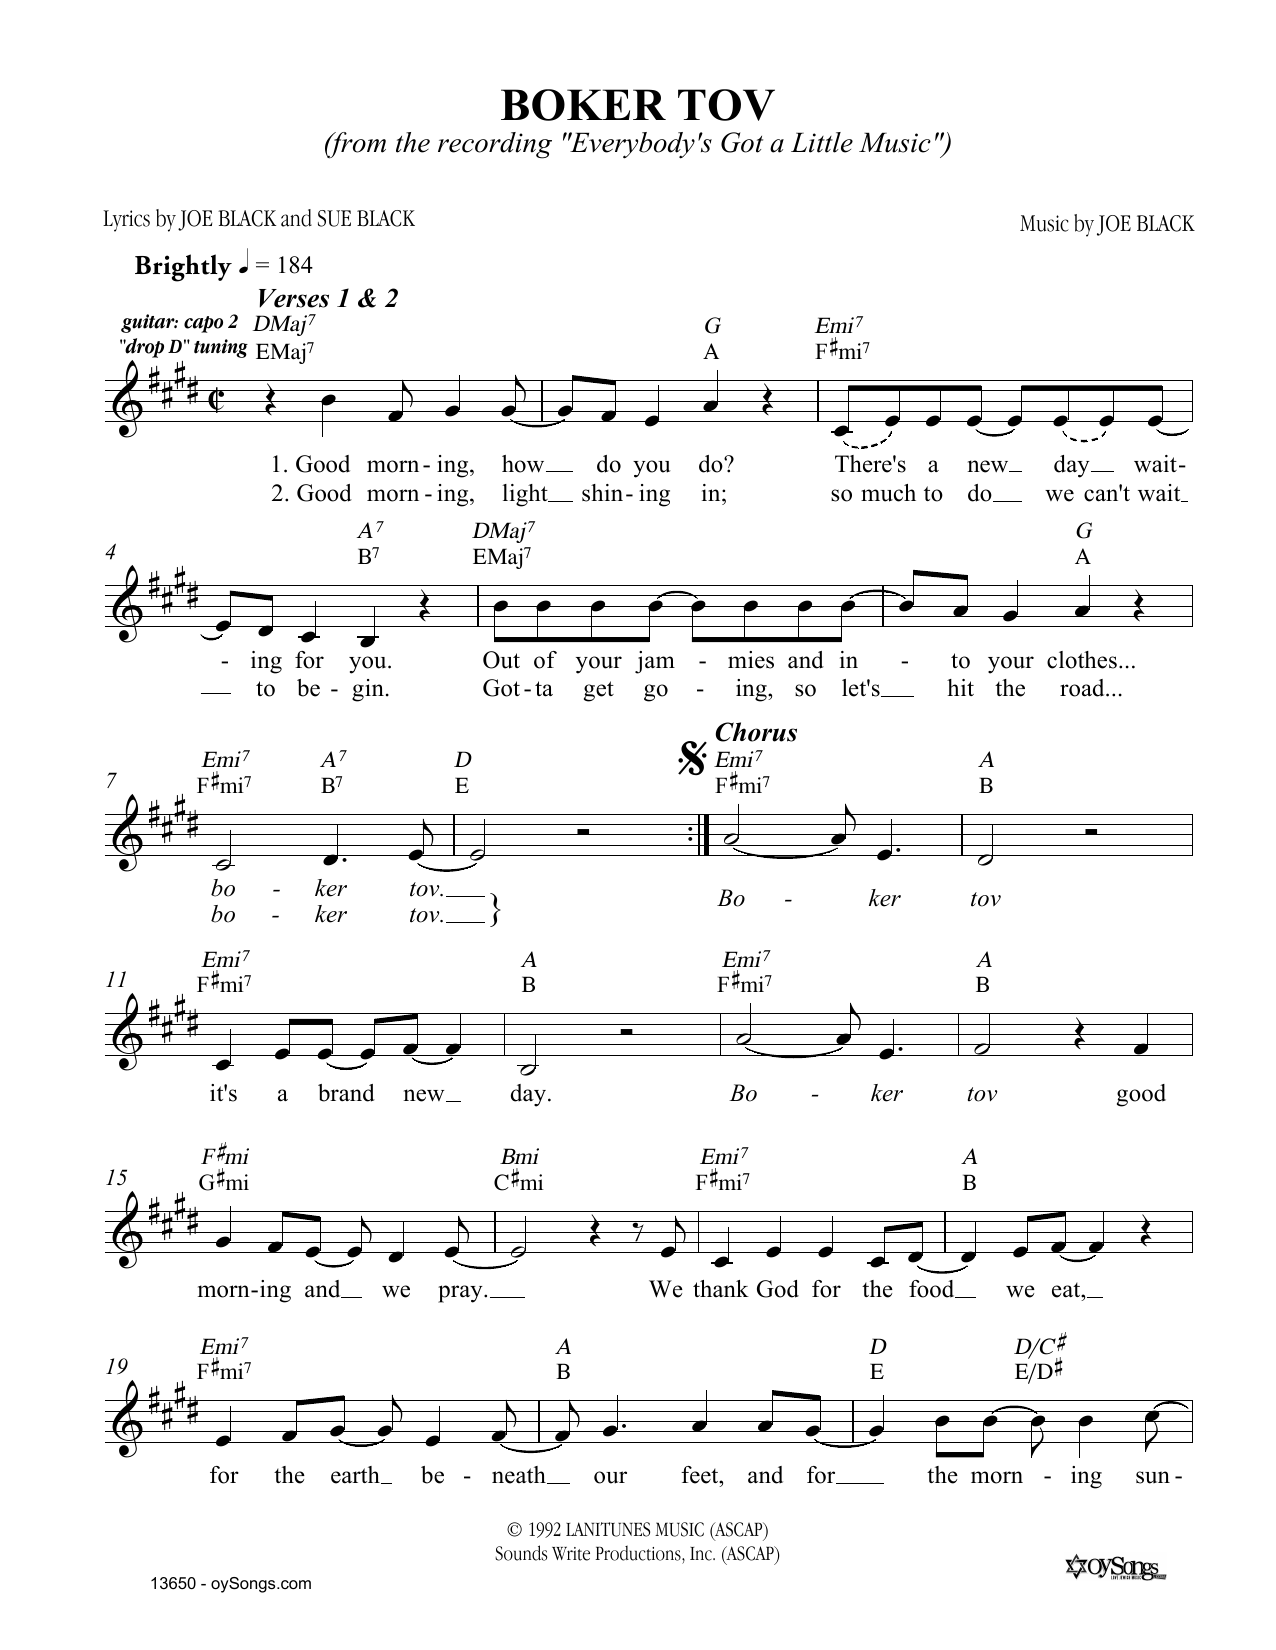 Joe Black Boker Tov Sheet Music Notes & Chords for Melody Line, Lyrics & Chords - Download or Print PDF